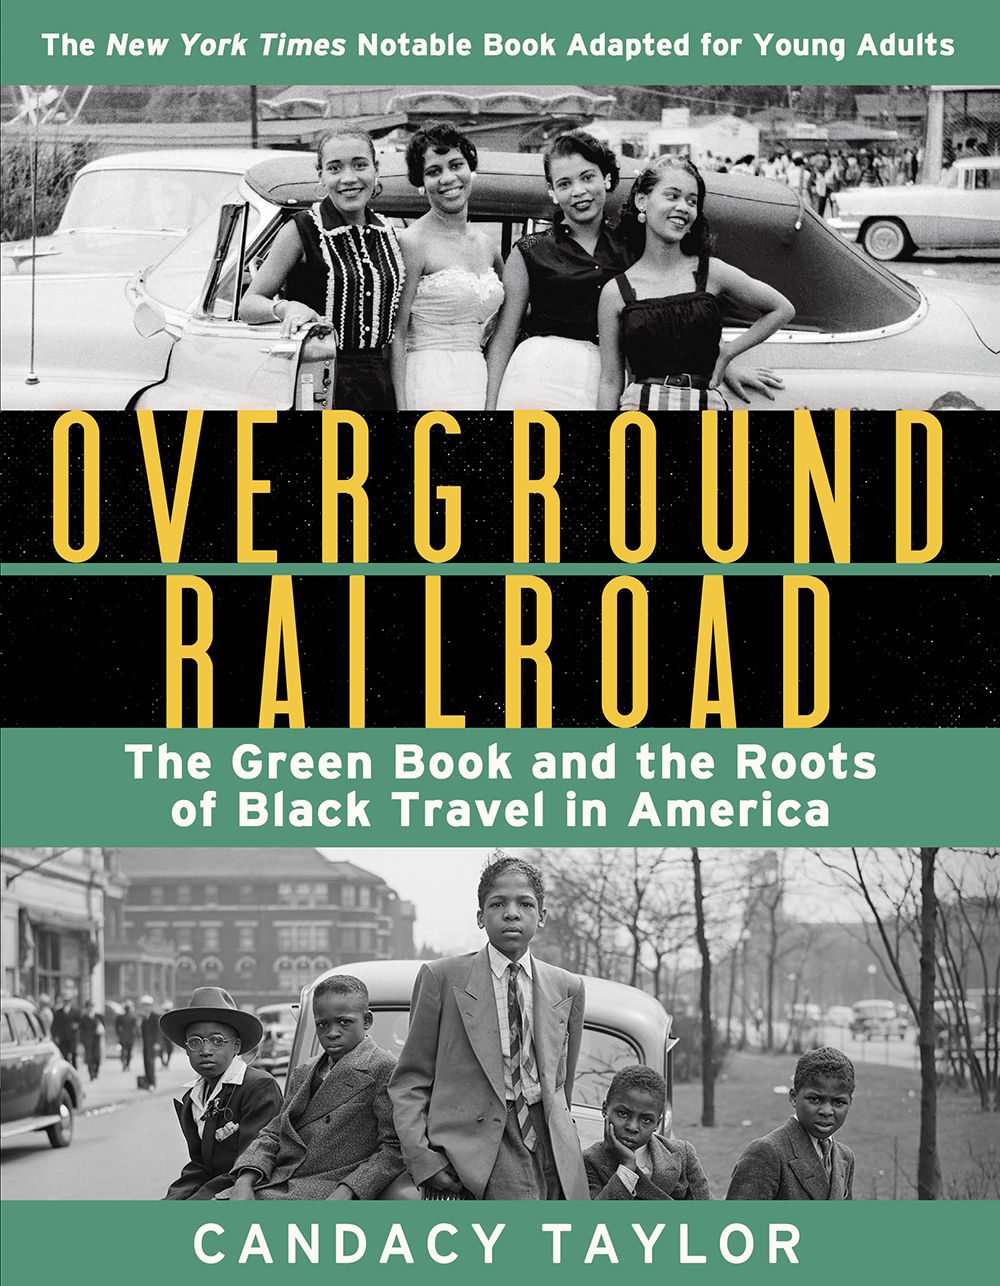 overground railroad cover